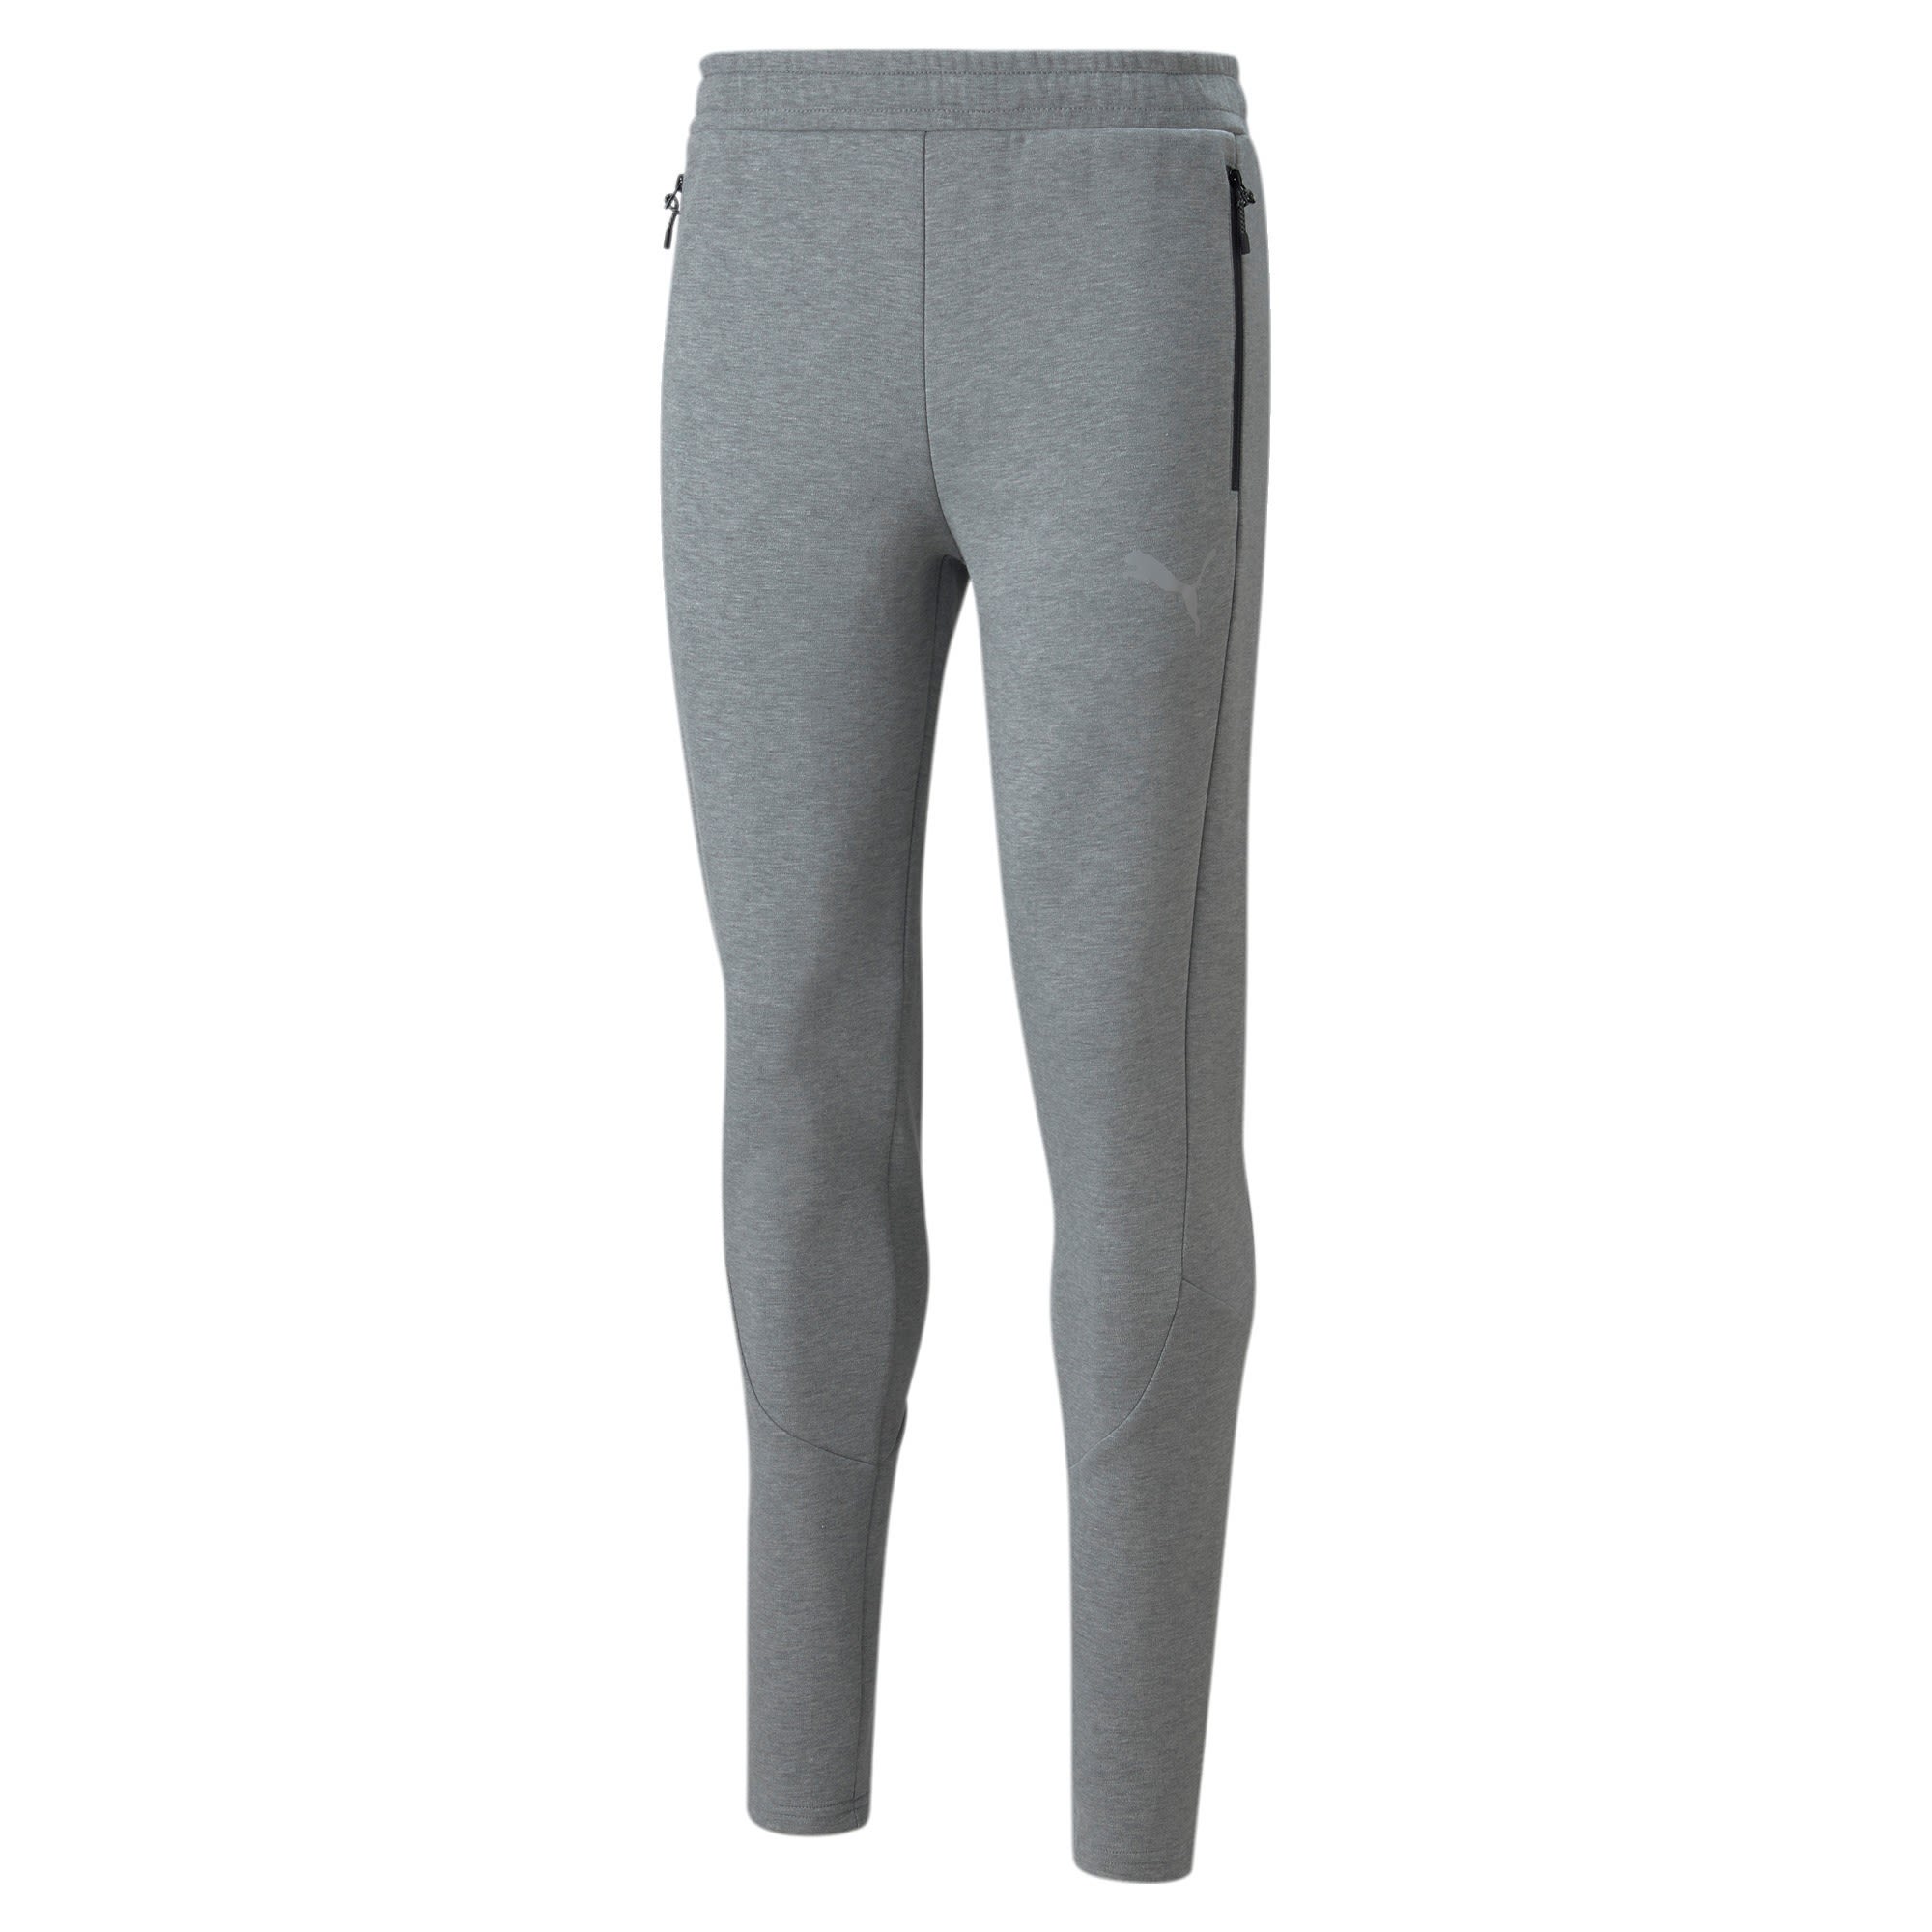 Puma Evostripe Pants Grau- Male Softshellhosen- Grsse 4XL - Farbe Medium Gray Heather